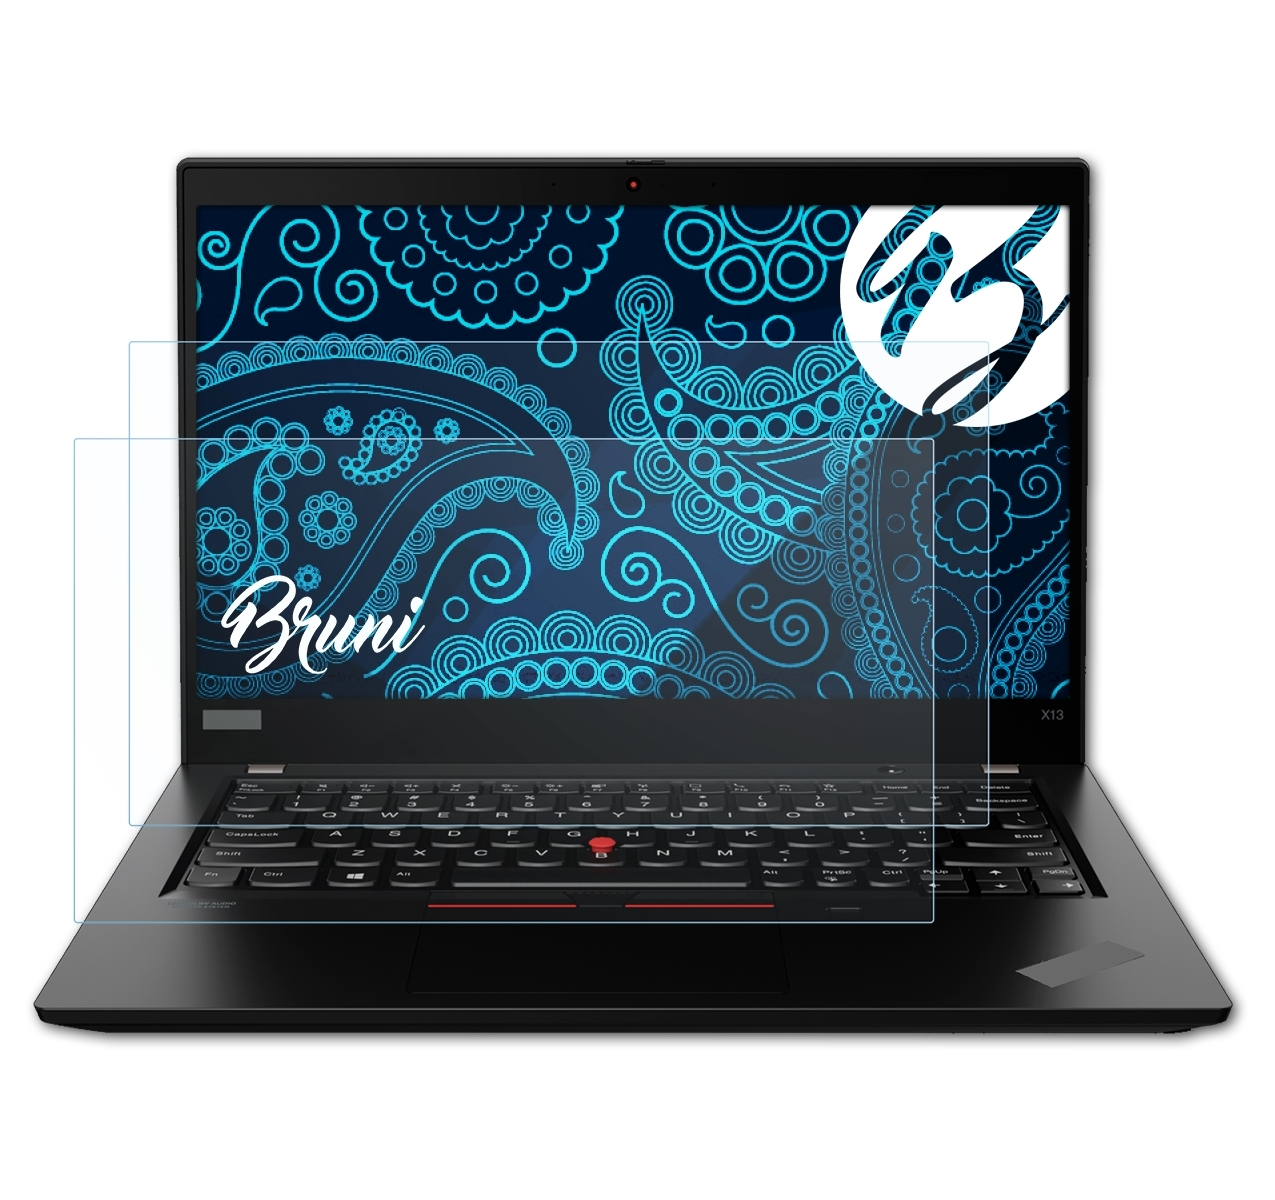 ThinkPad X13) BRUNI Lenovo 2x Basics-Clear Schutzfolie(für